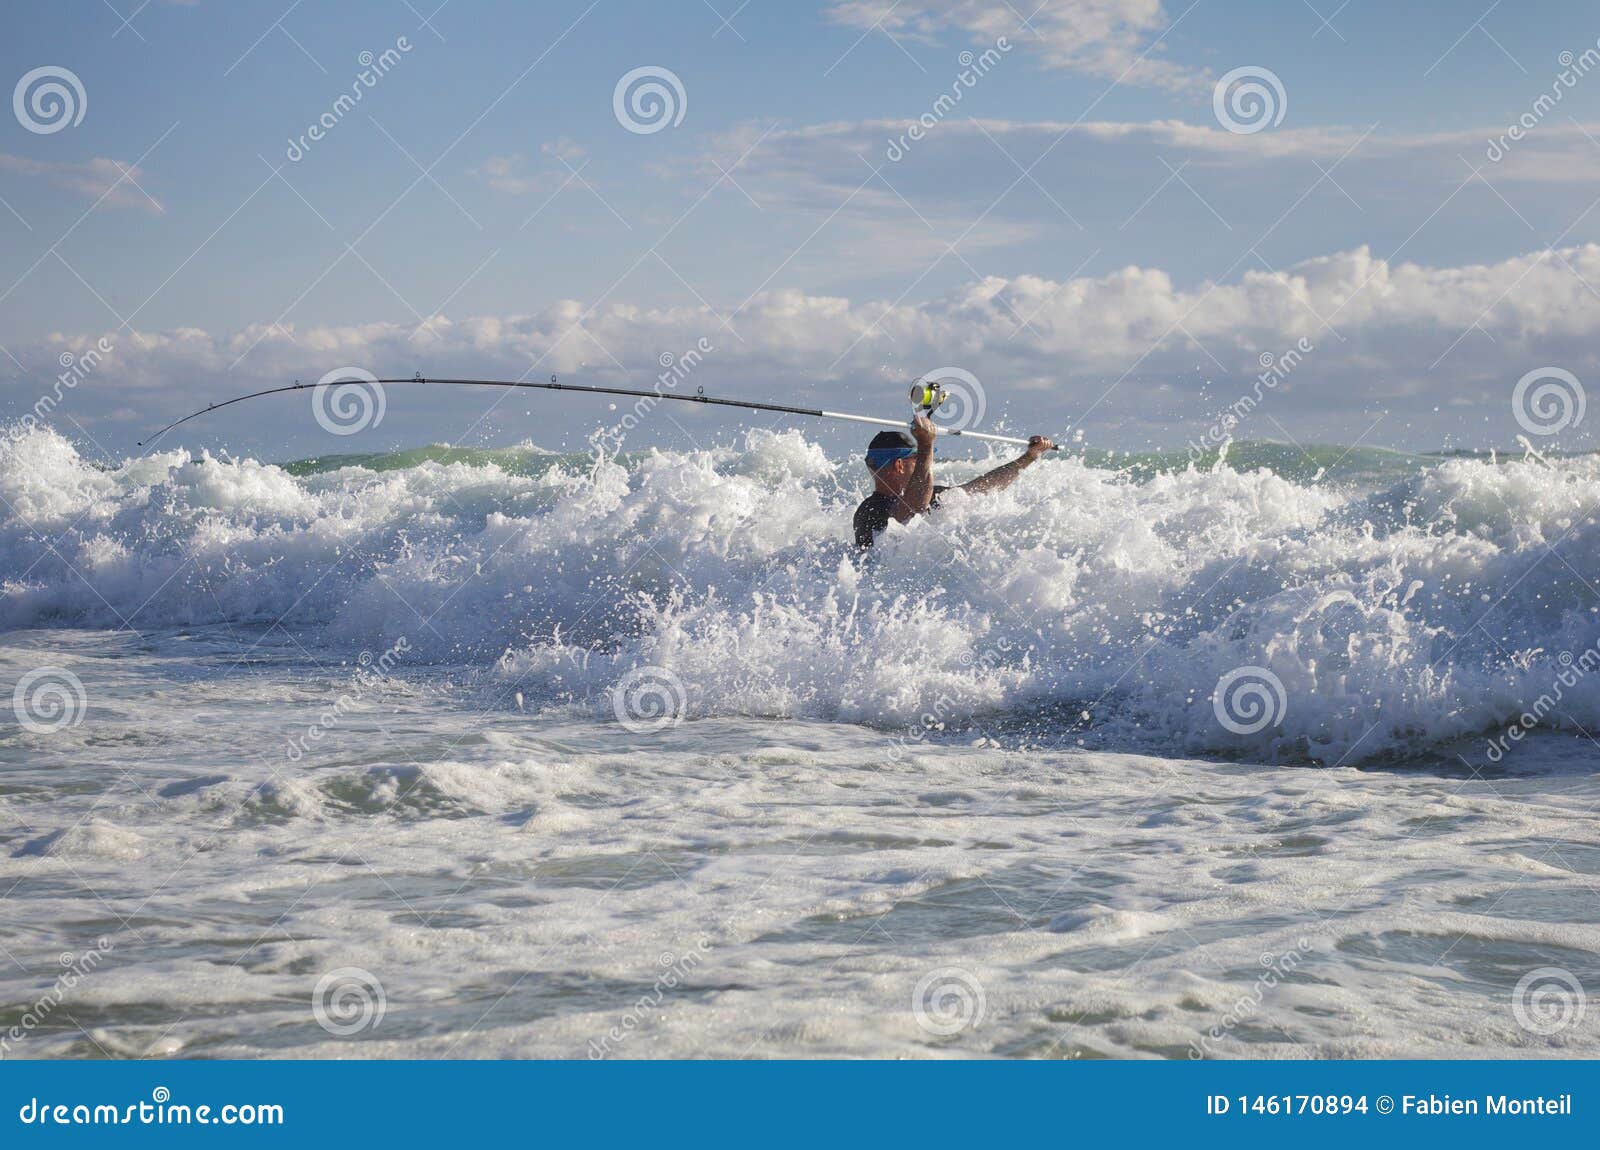 surf fishing scene